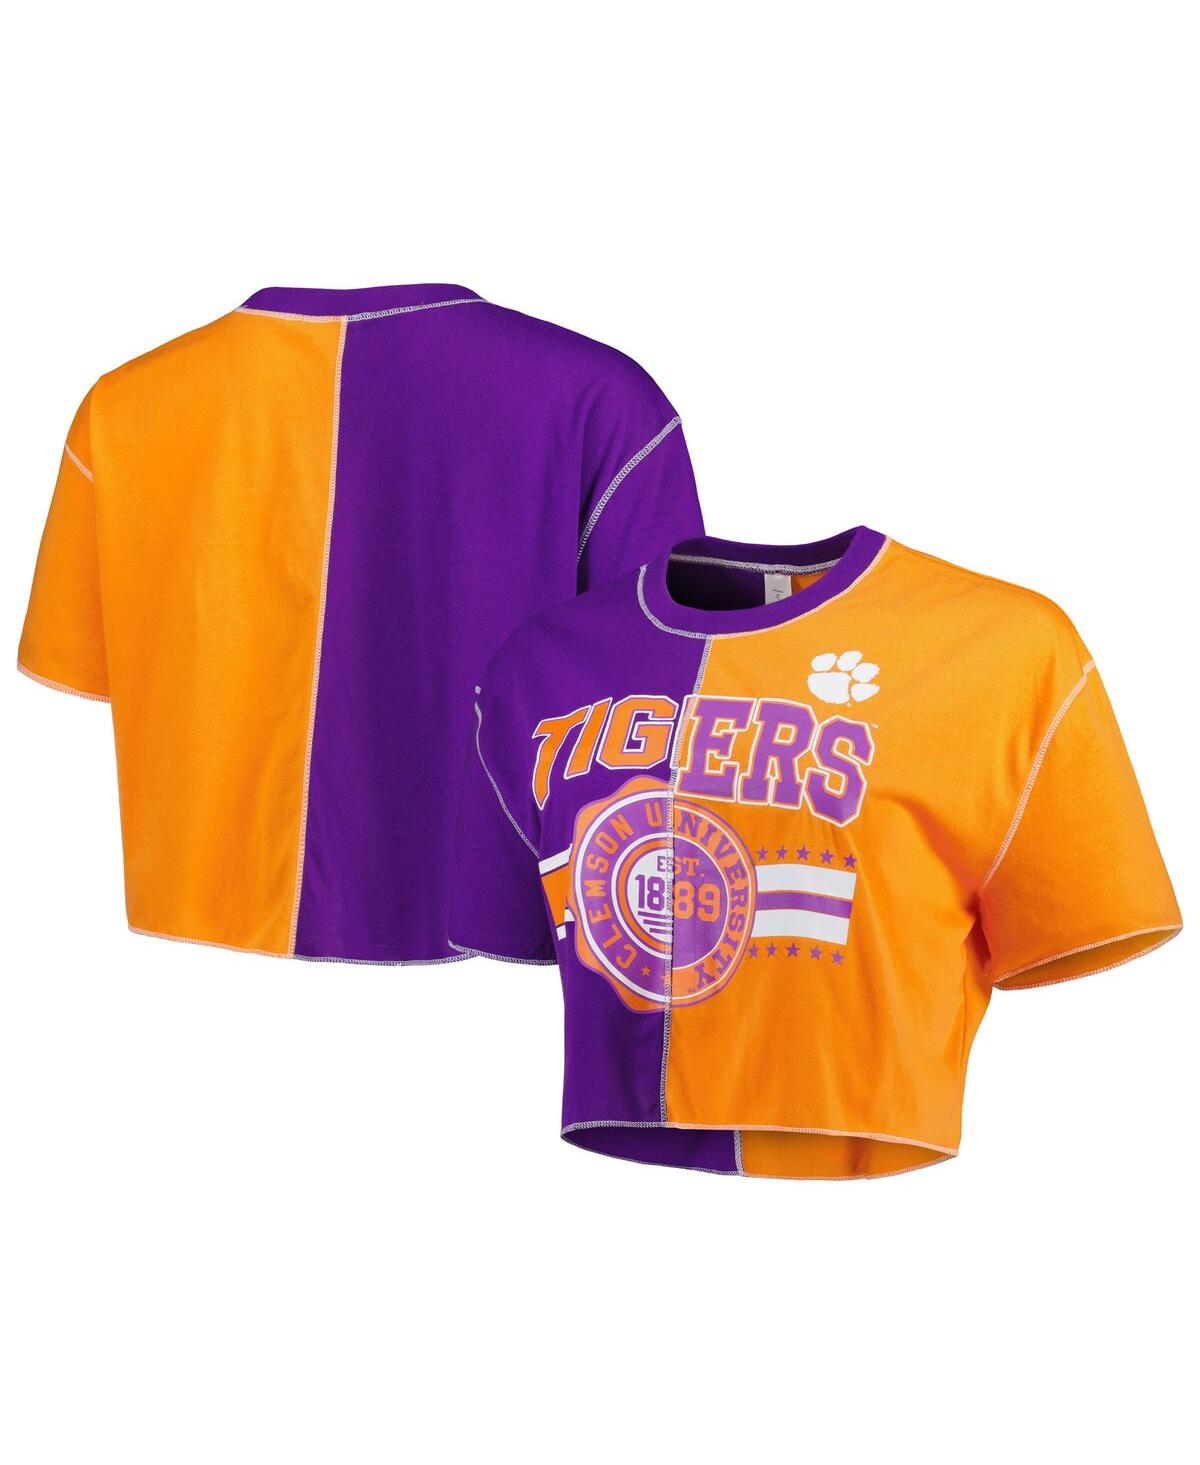 Women's ZooZatz Purple, Orange Clemson Tigers Colorblock Cropped T-shirt - Purple, Orange